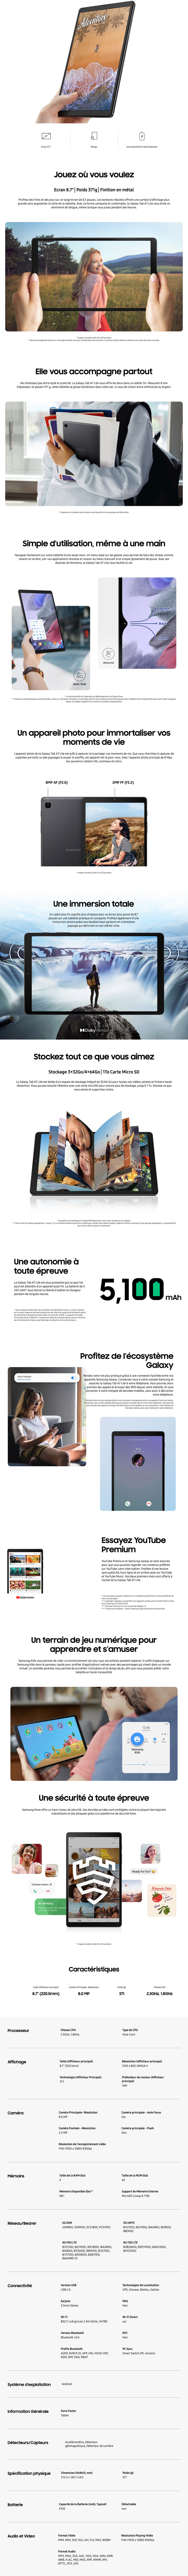 Acheter Tablette Samsung Galaxy A7 Lite 4 GB Maroc